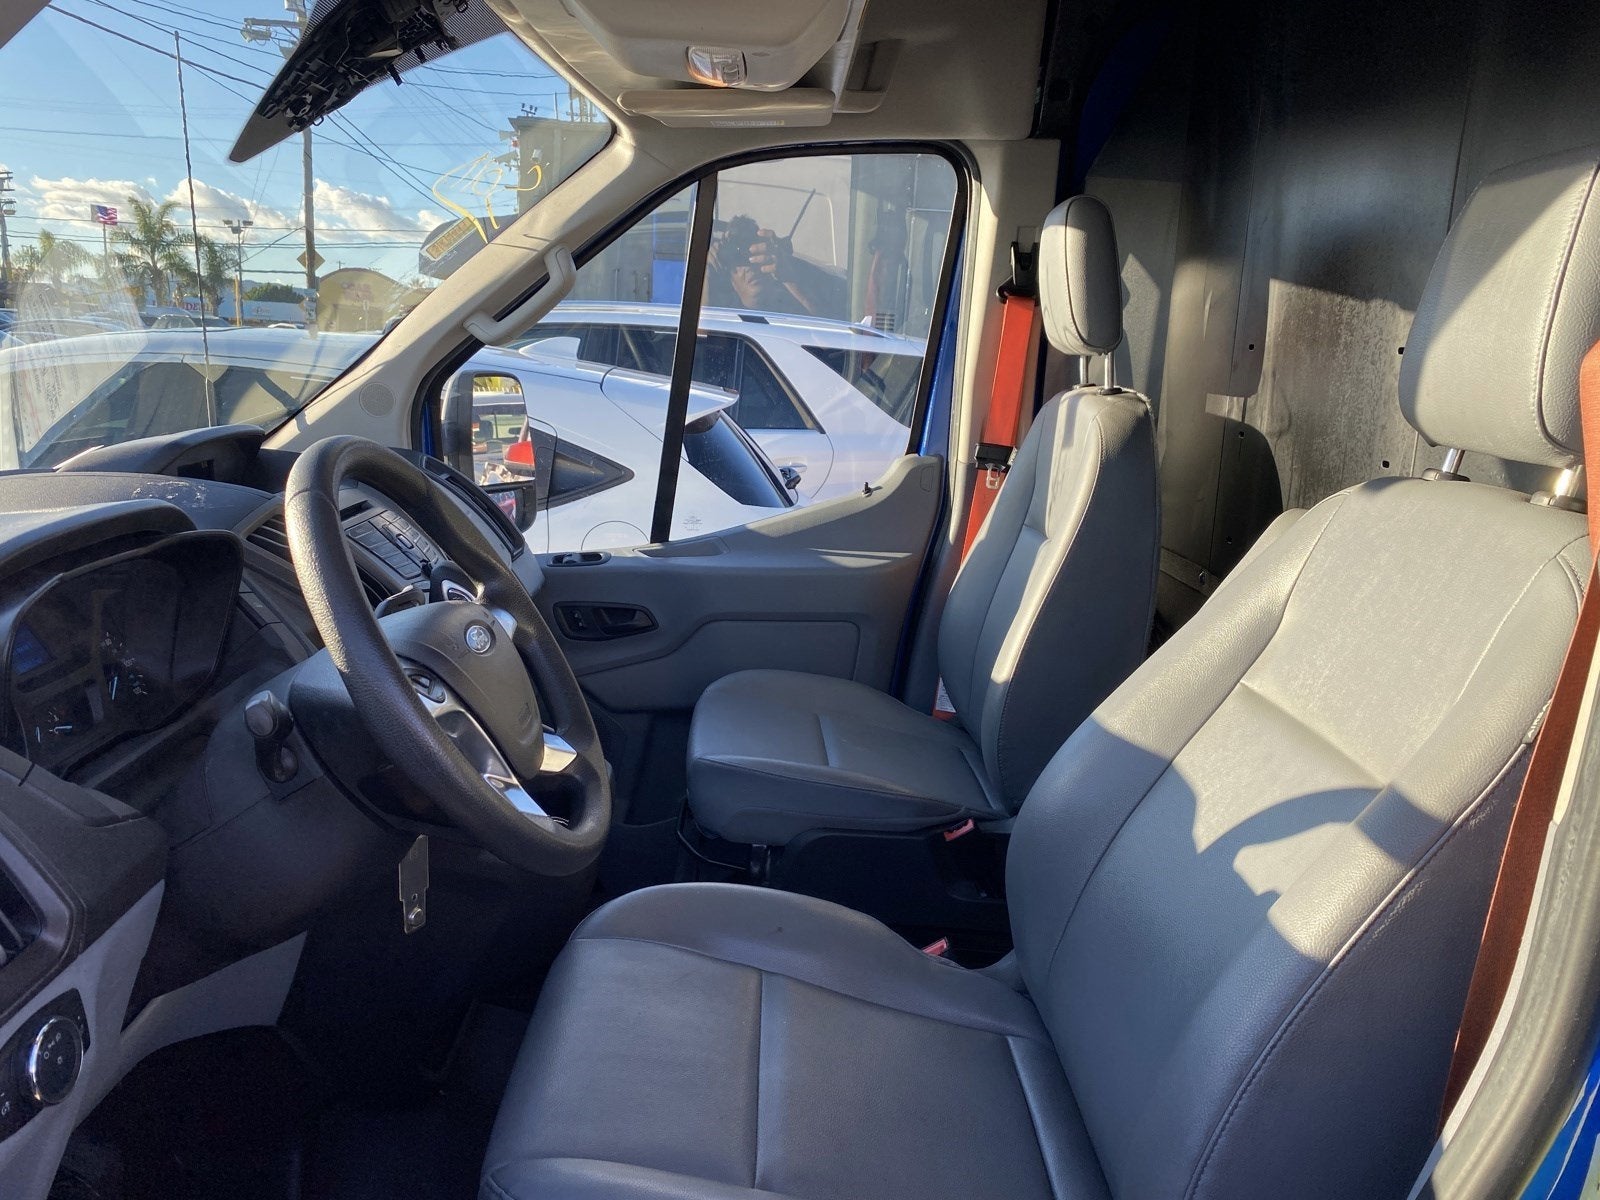 2019 Ford Transit Van T-250 148" Med Rf 9000 GVWR Sliding RH Dr